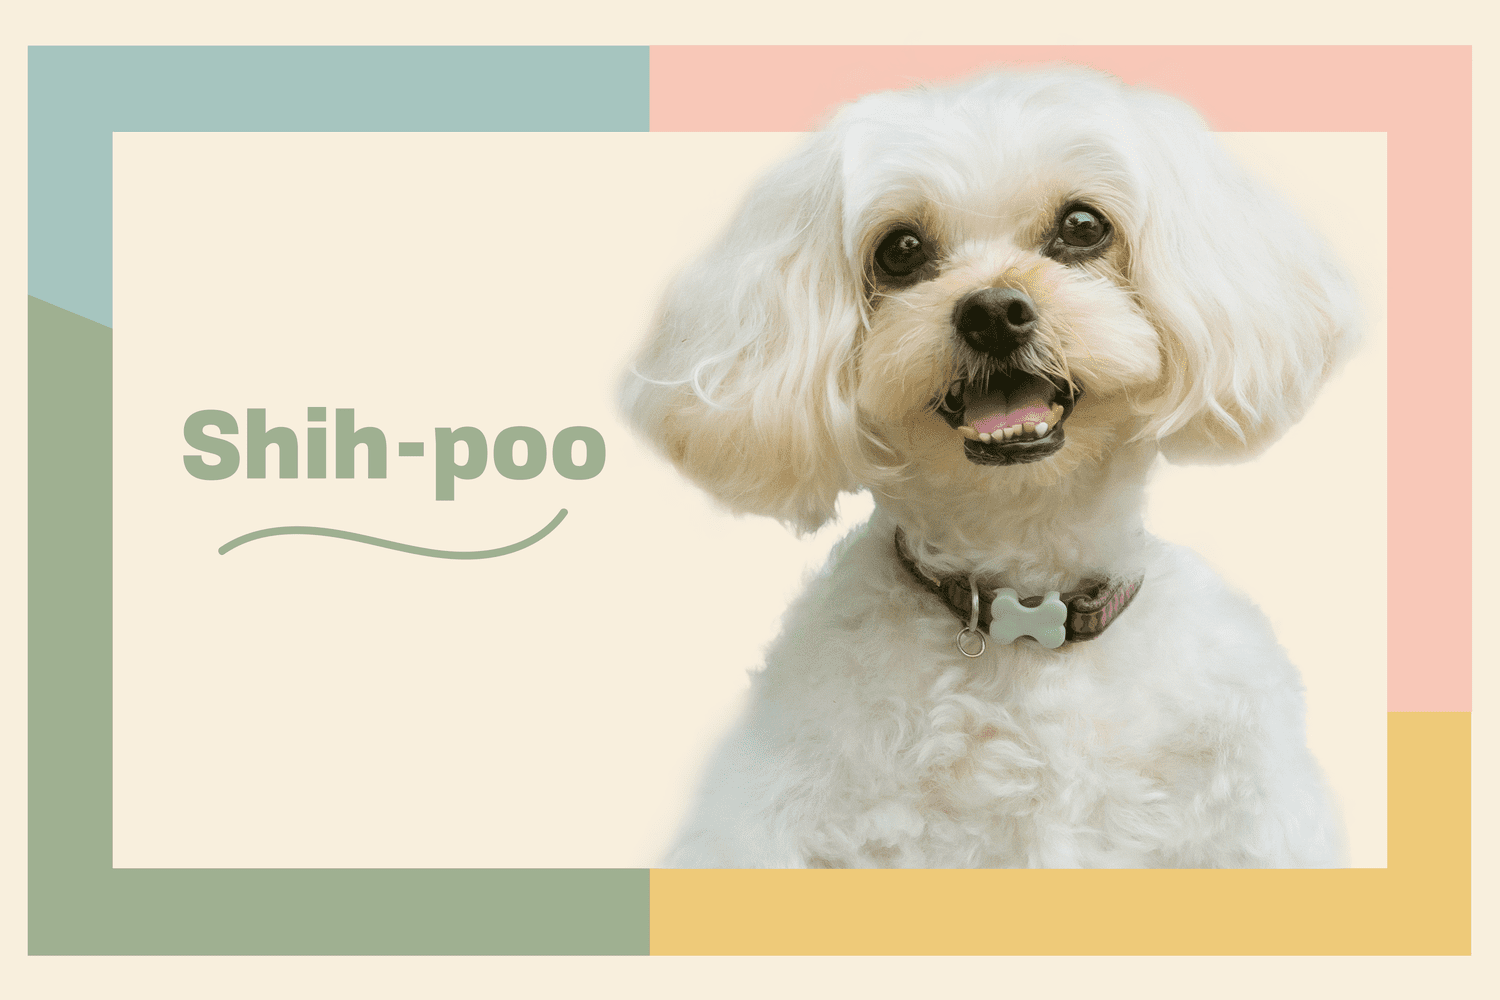 Profile treatment of white shih-poo dog